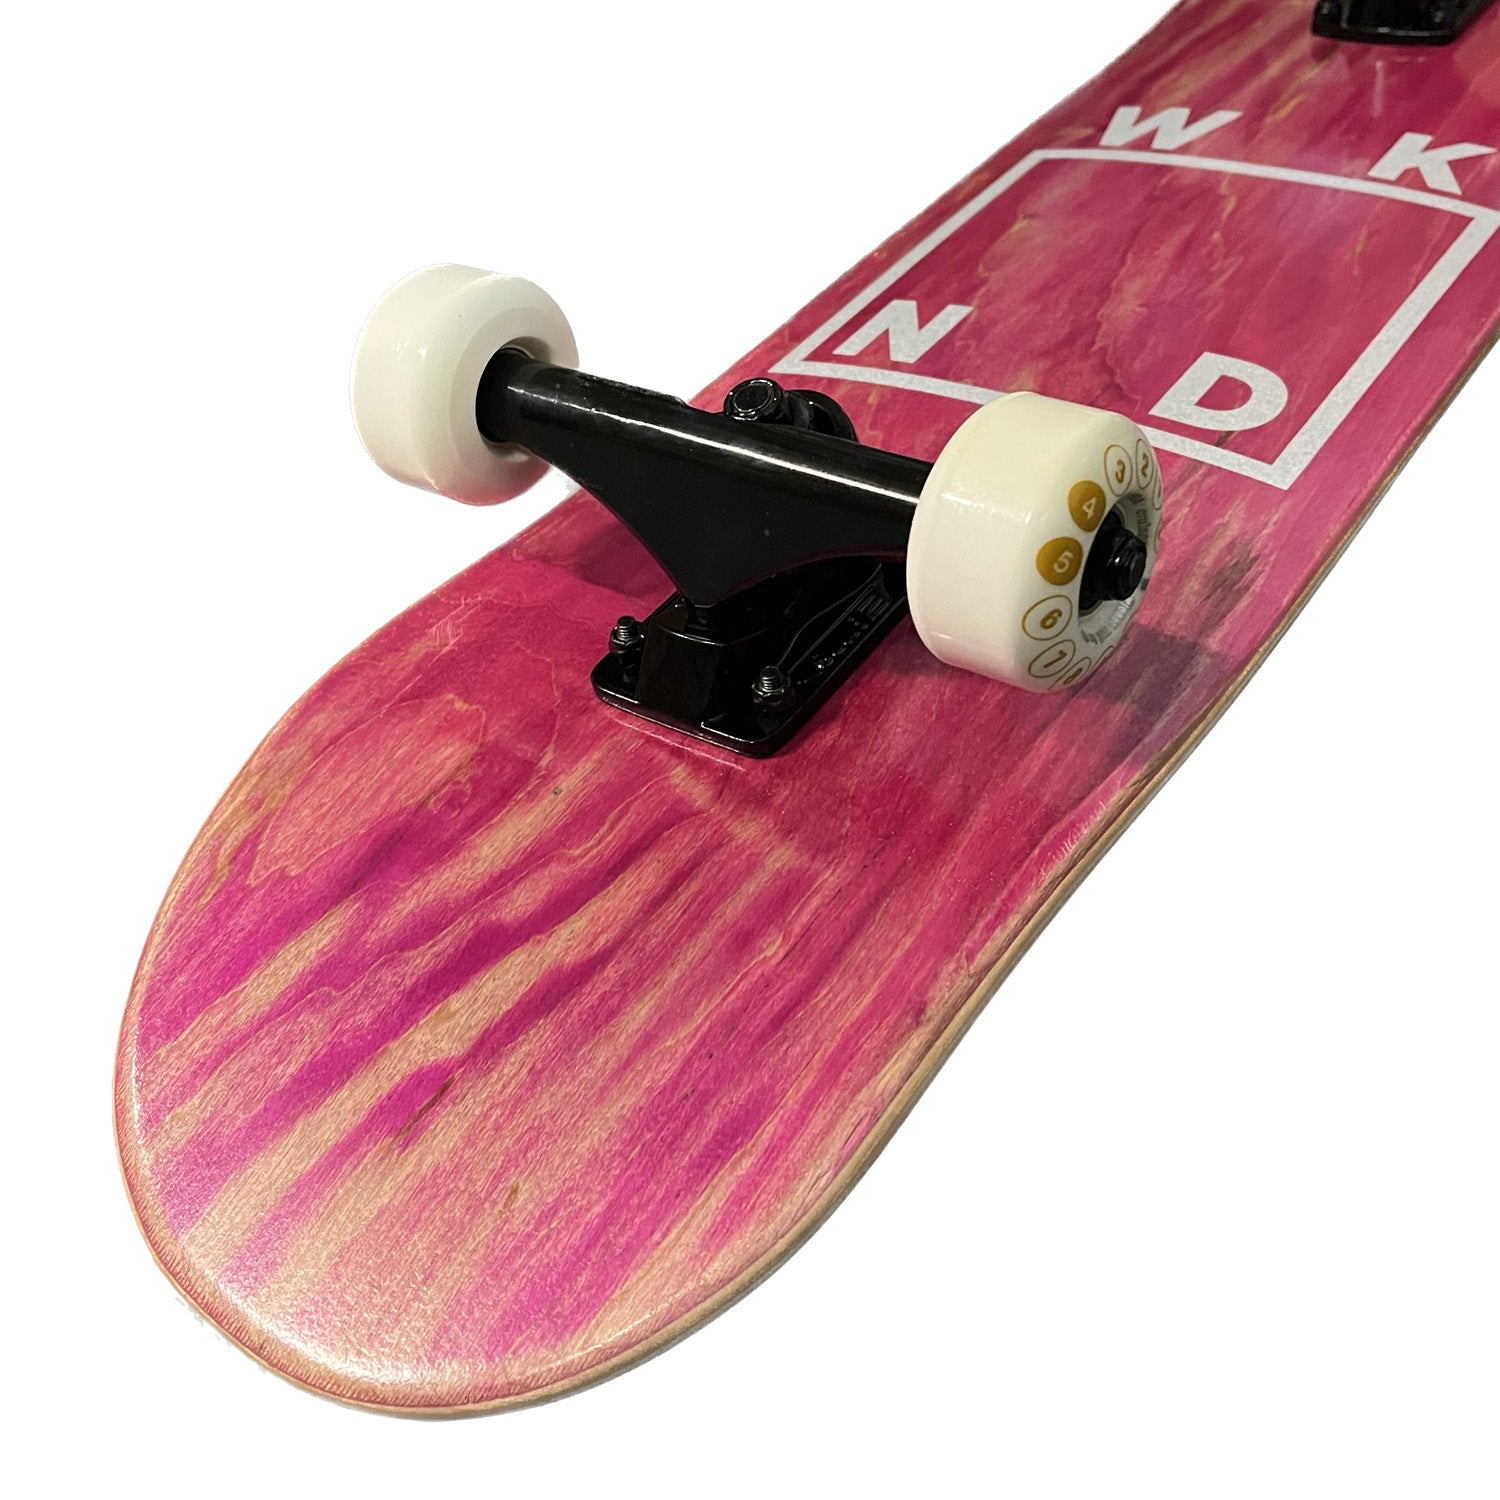 WKND Team Logo Glitters Pink 7.75" Custom Complete Skateboard Hybrid